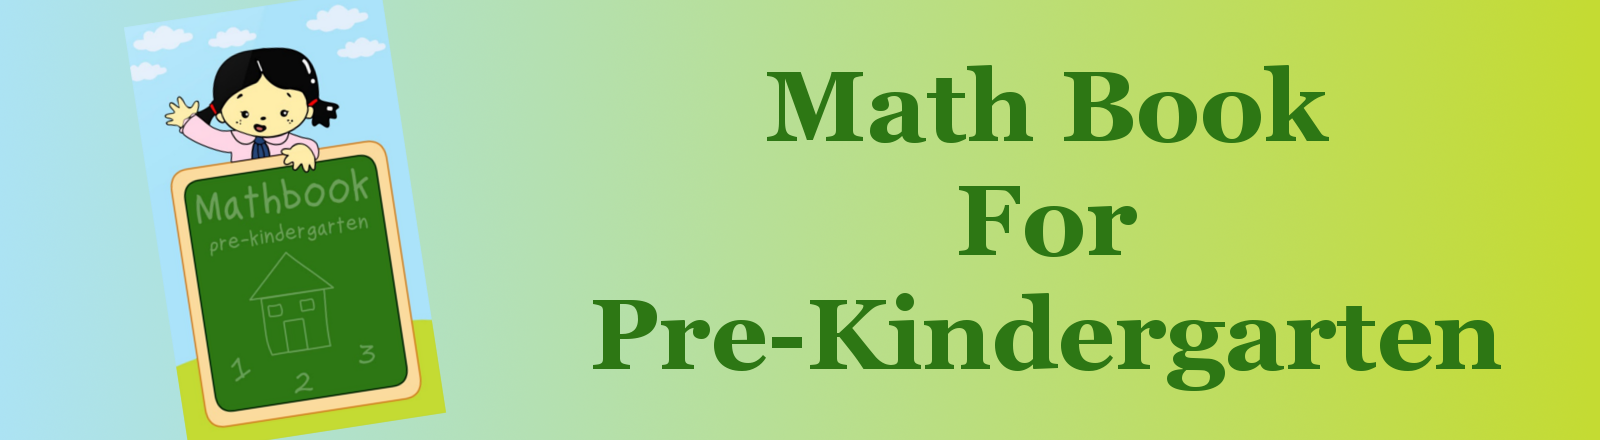 Math Book For Pre-Kindergarten